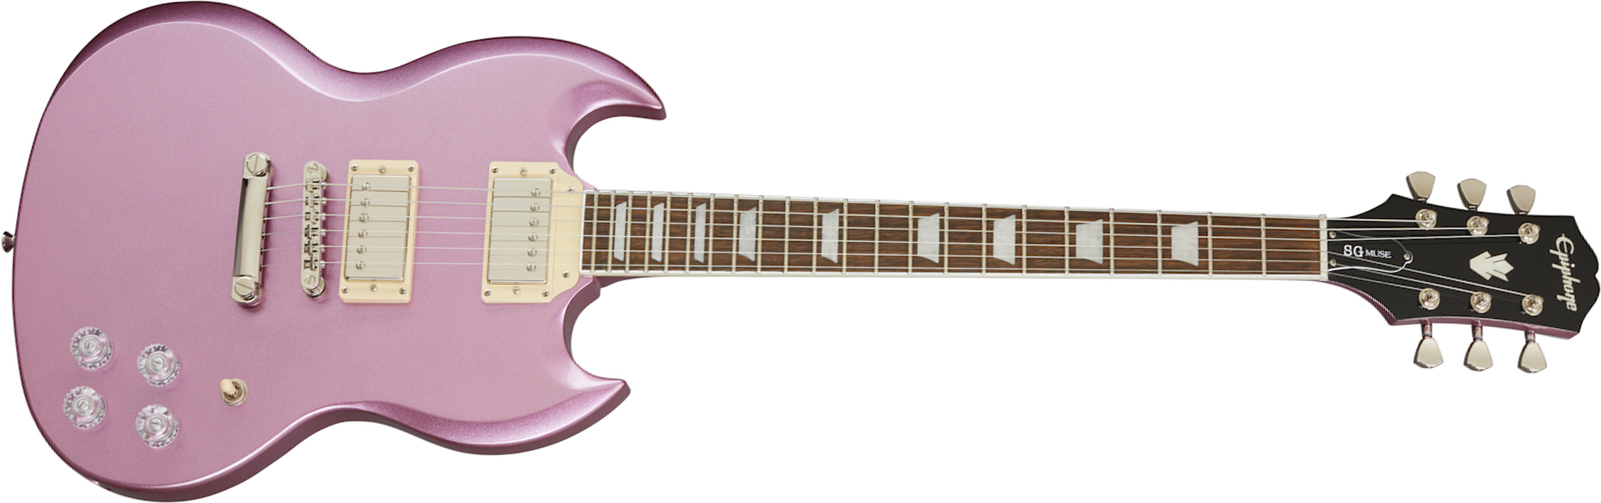 Epiphone Sg Muse Modern 2h Ht Lau - Purple Passion Metallic - Retro rock electric guitar - Main picture